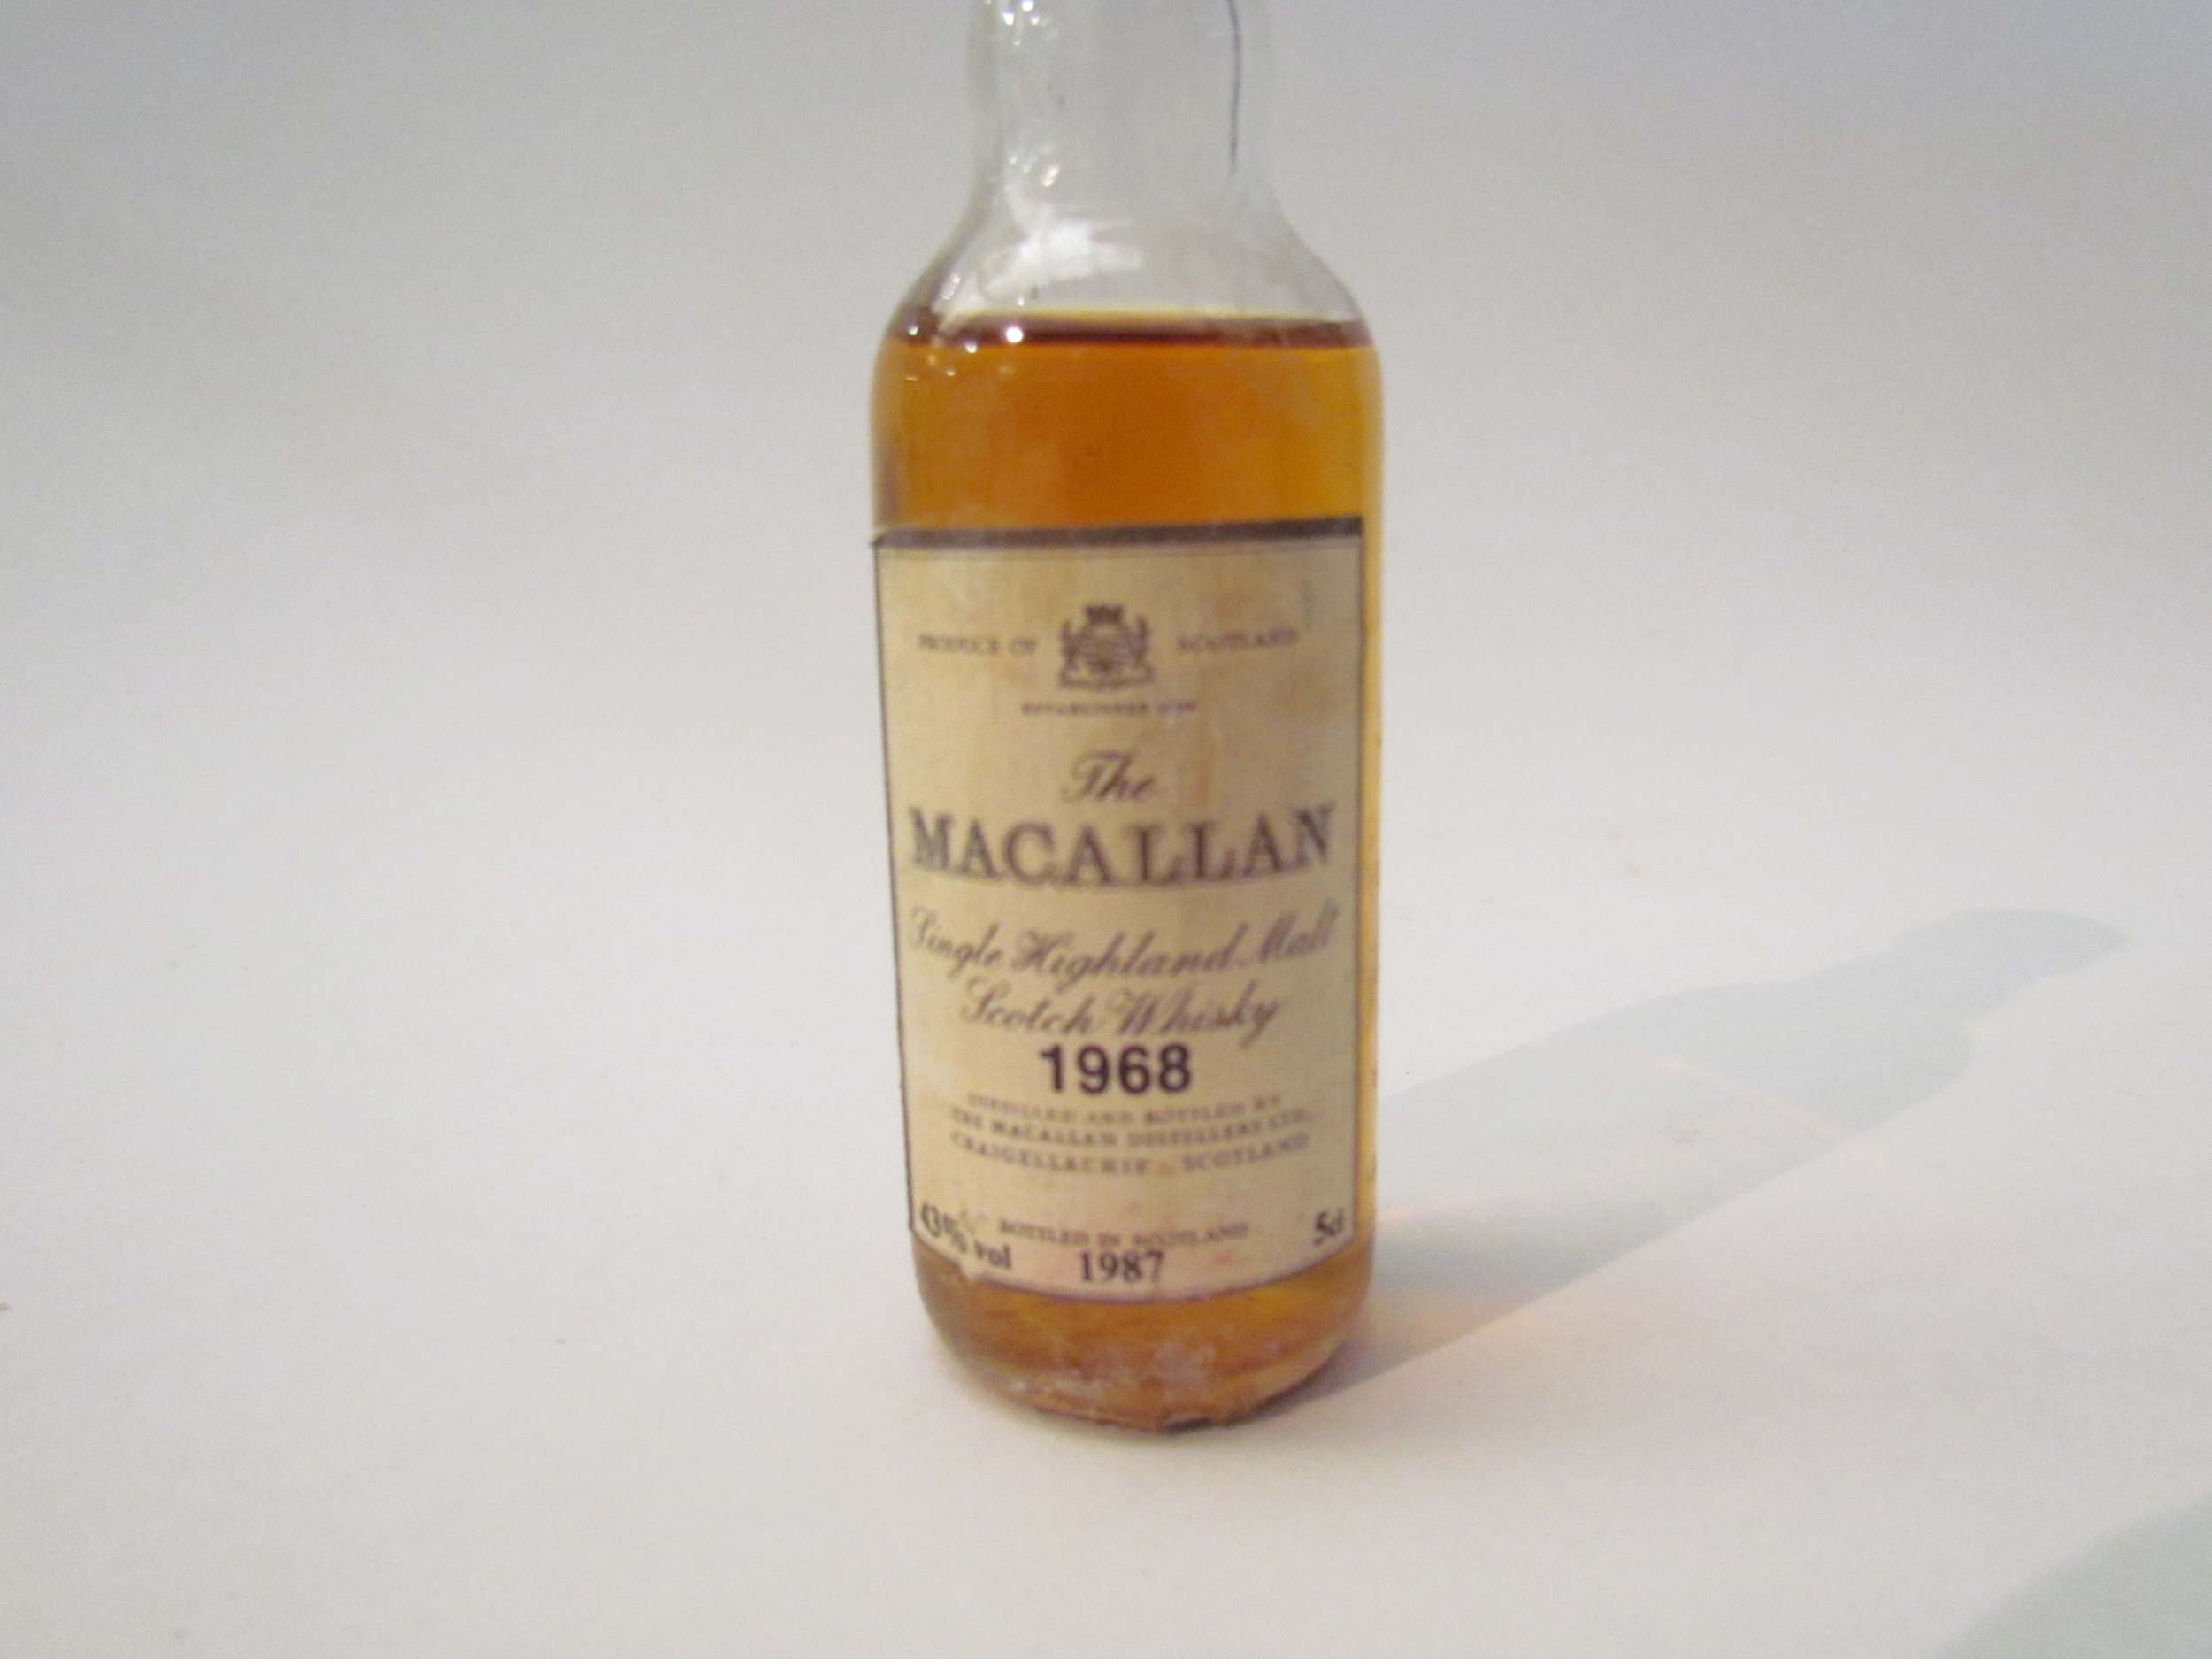 5cl miniature; 1968 The Macallan Single Highland Malt Scotch Whisky bottled 1987 - Image 2 of 2